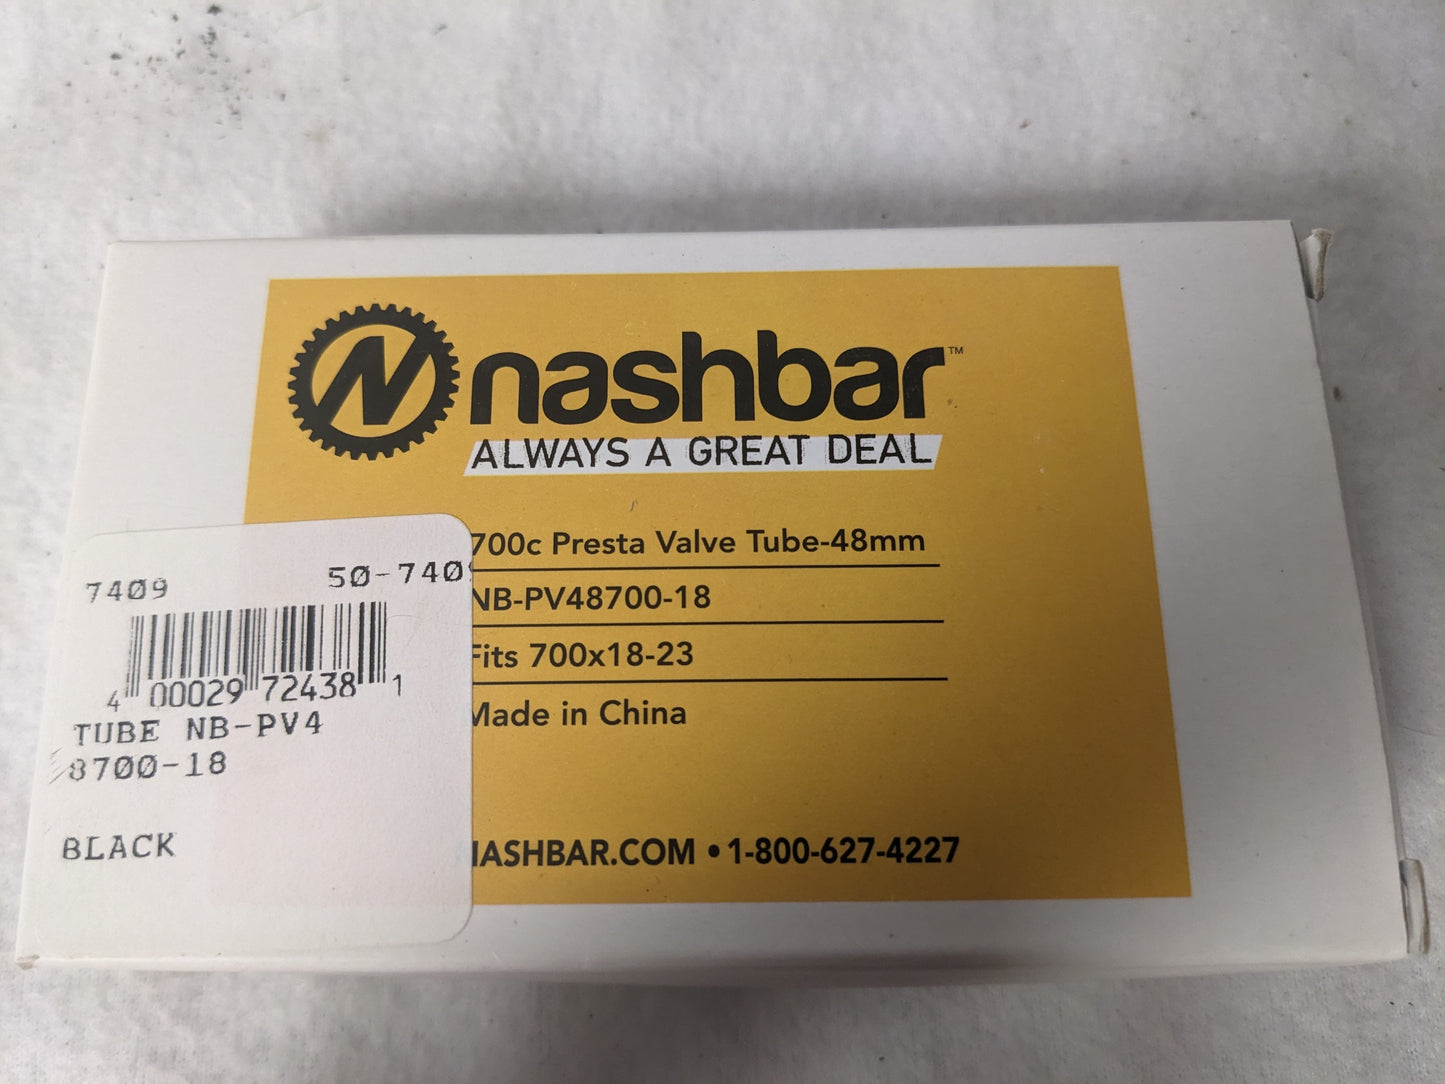 Nashbar Always A Great Deal 700c Presta Valve Tube - 48 Mm Fit 700x 18-23...